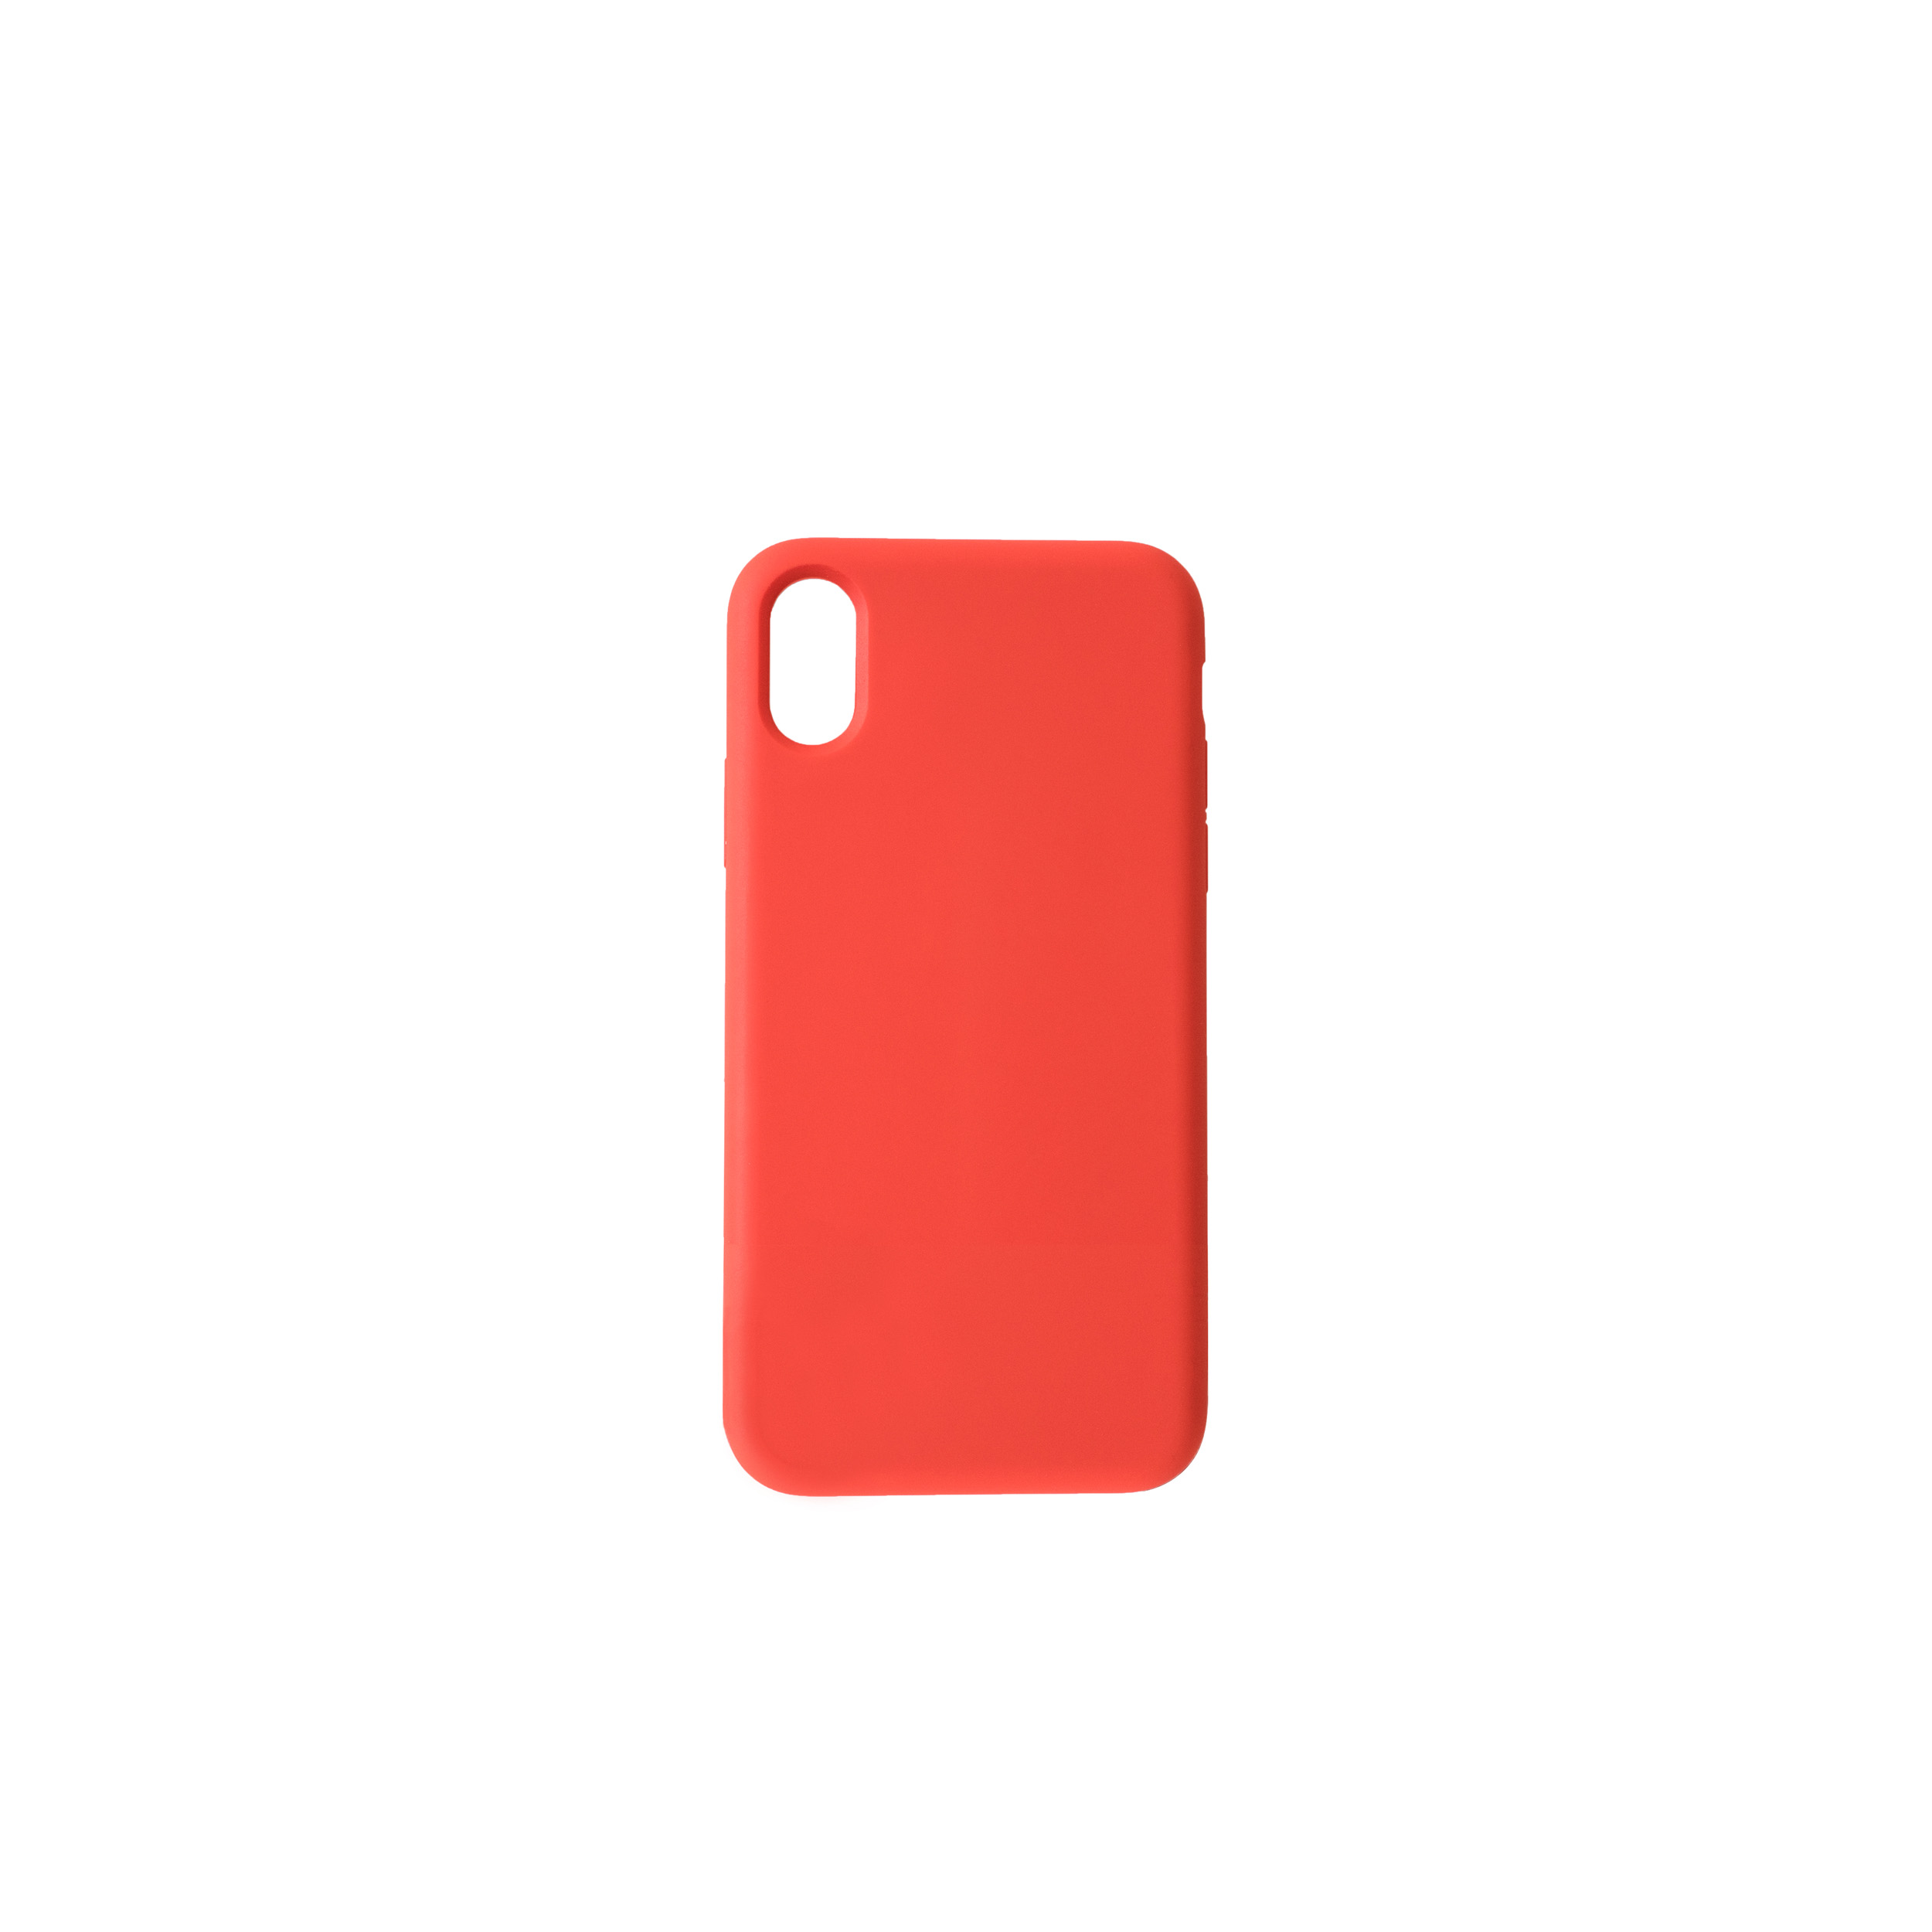 KMP Red, Schutzhülle iPhone XS, X Silikon Cover, red Apple, X, für XS, IPhone Full